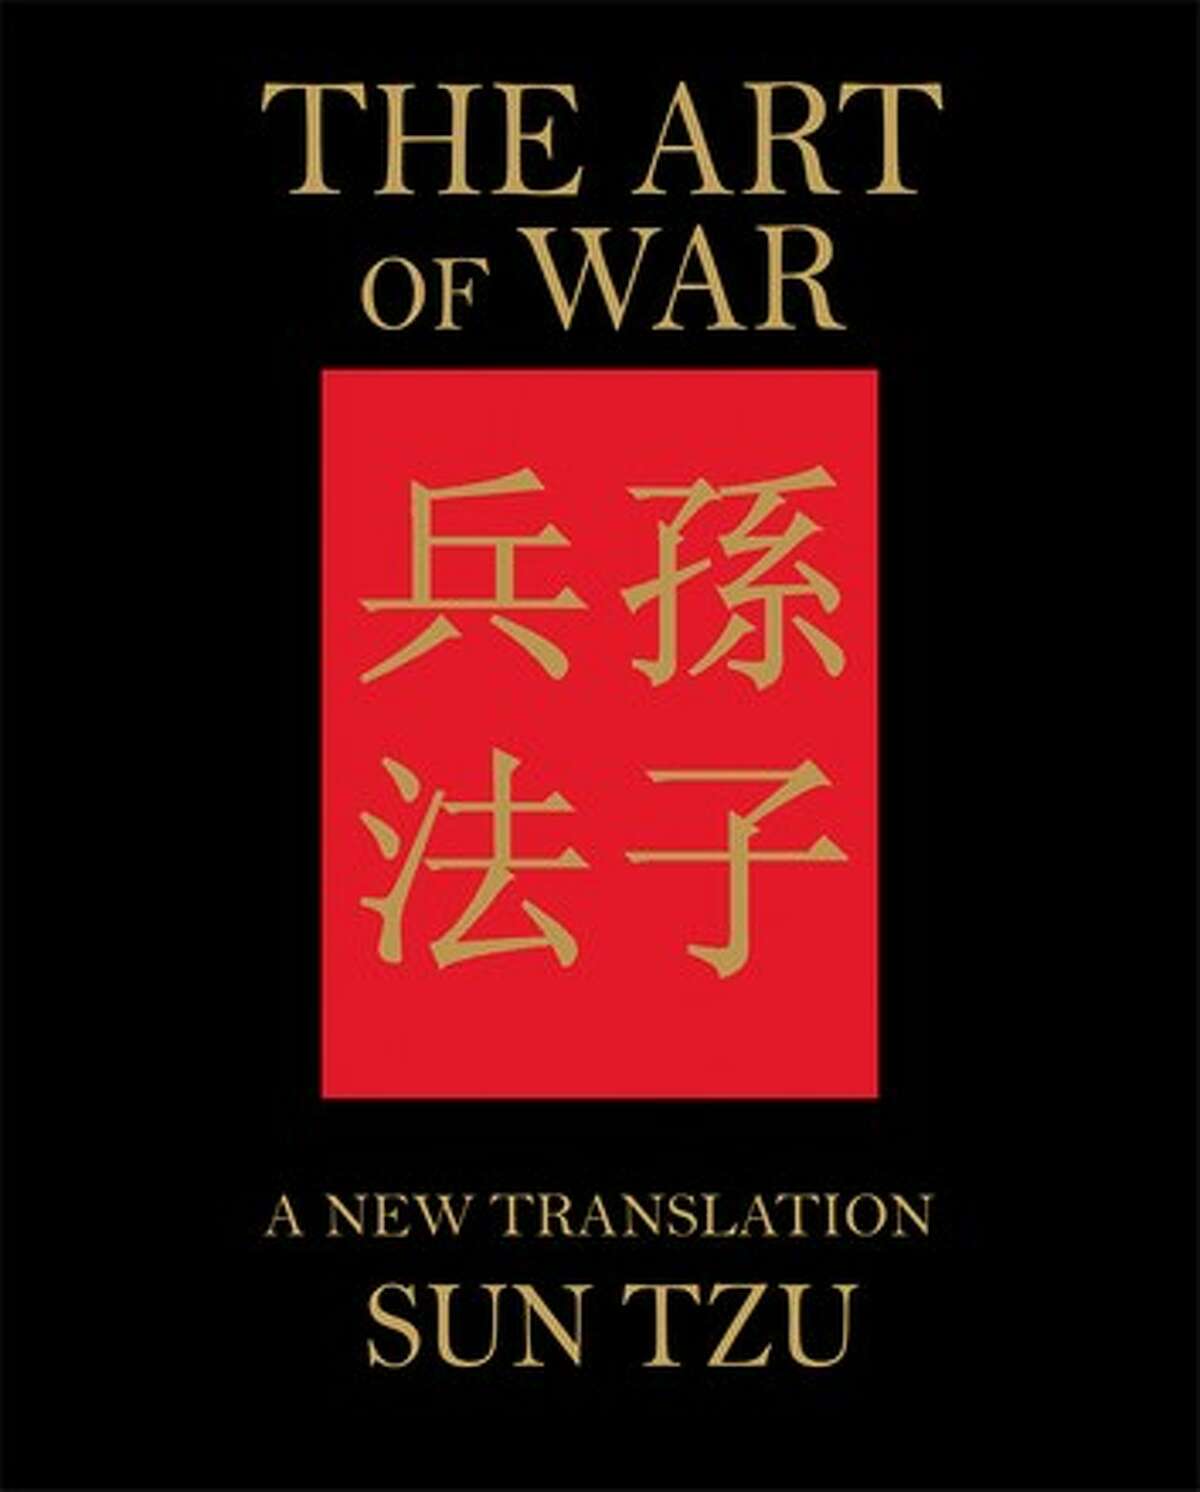 Lonnie Walker IV: “Art of War” by Sun Tzu